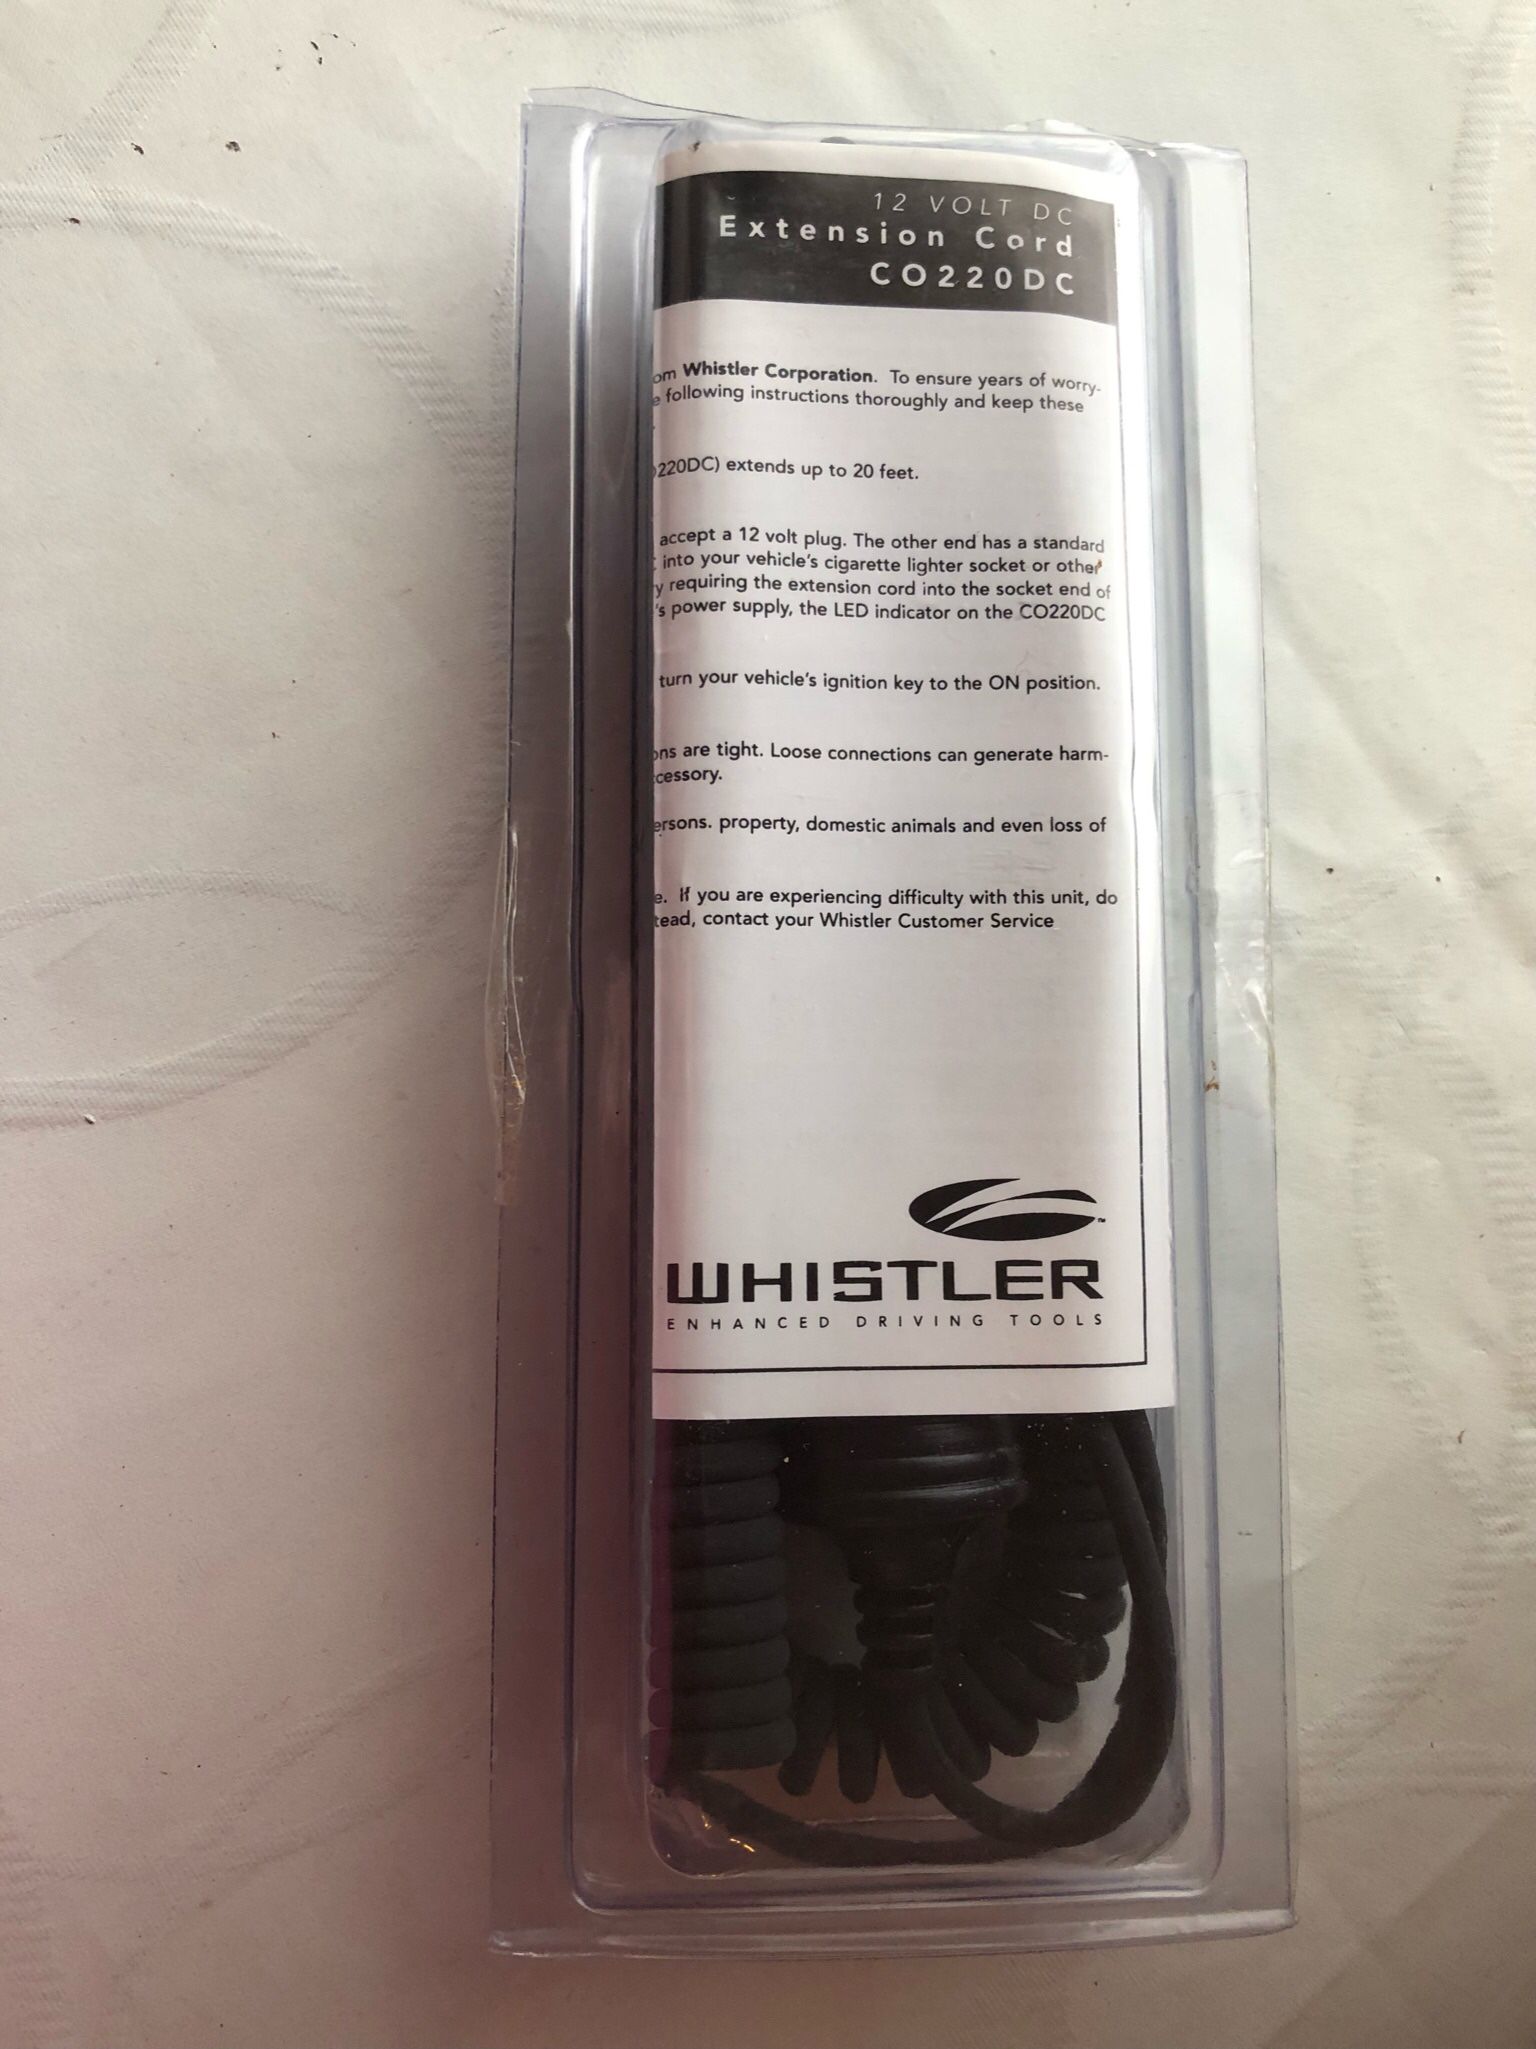 Whistler Auto Extension Cord